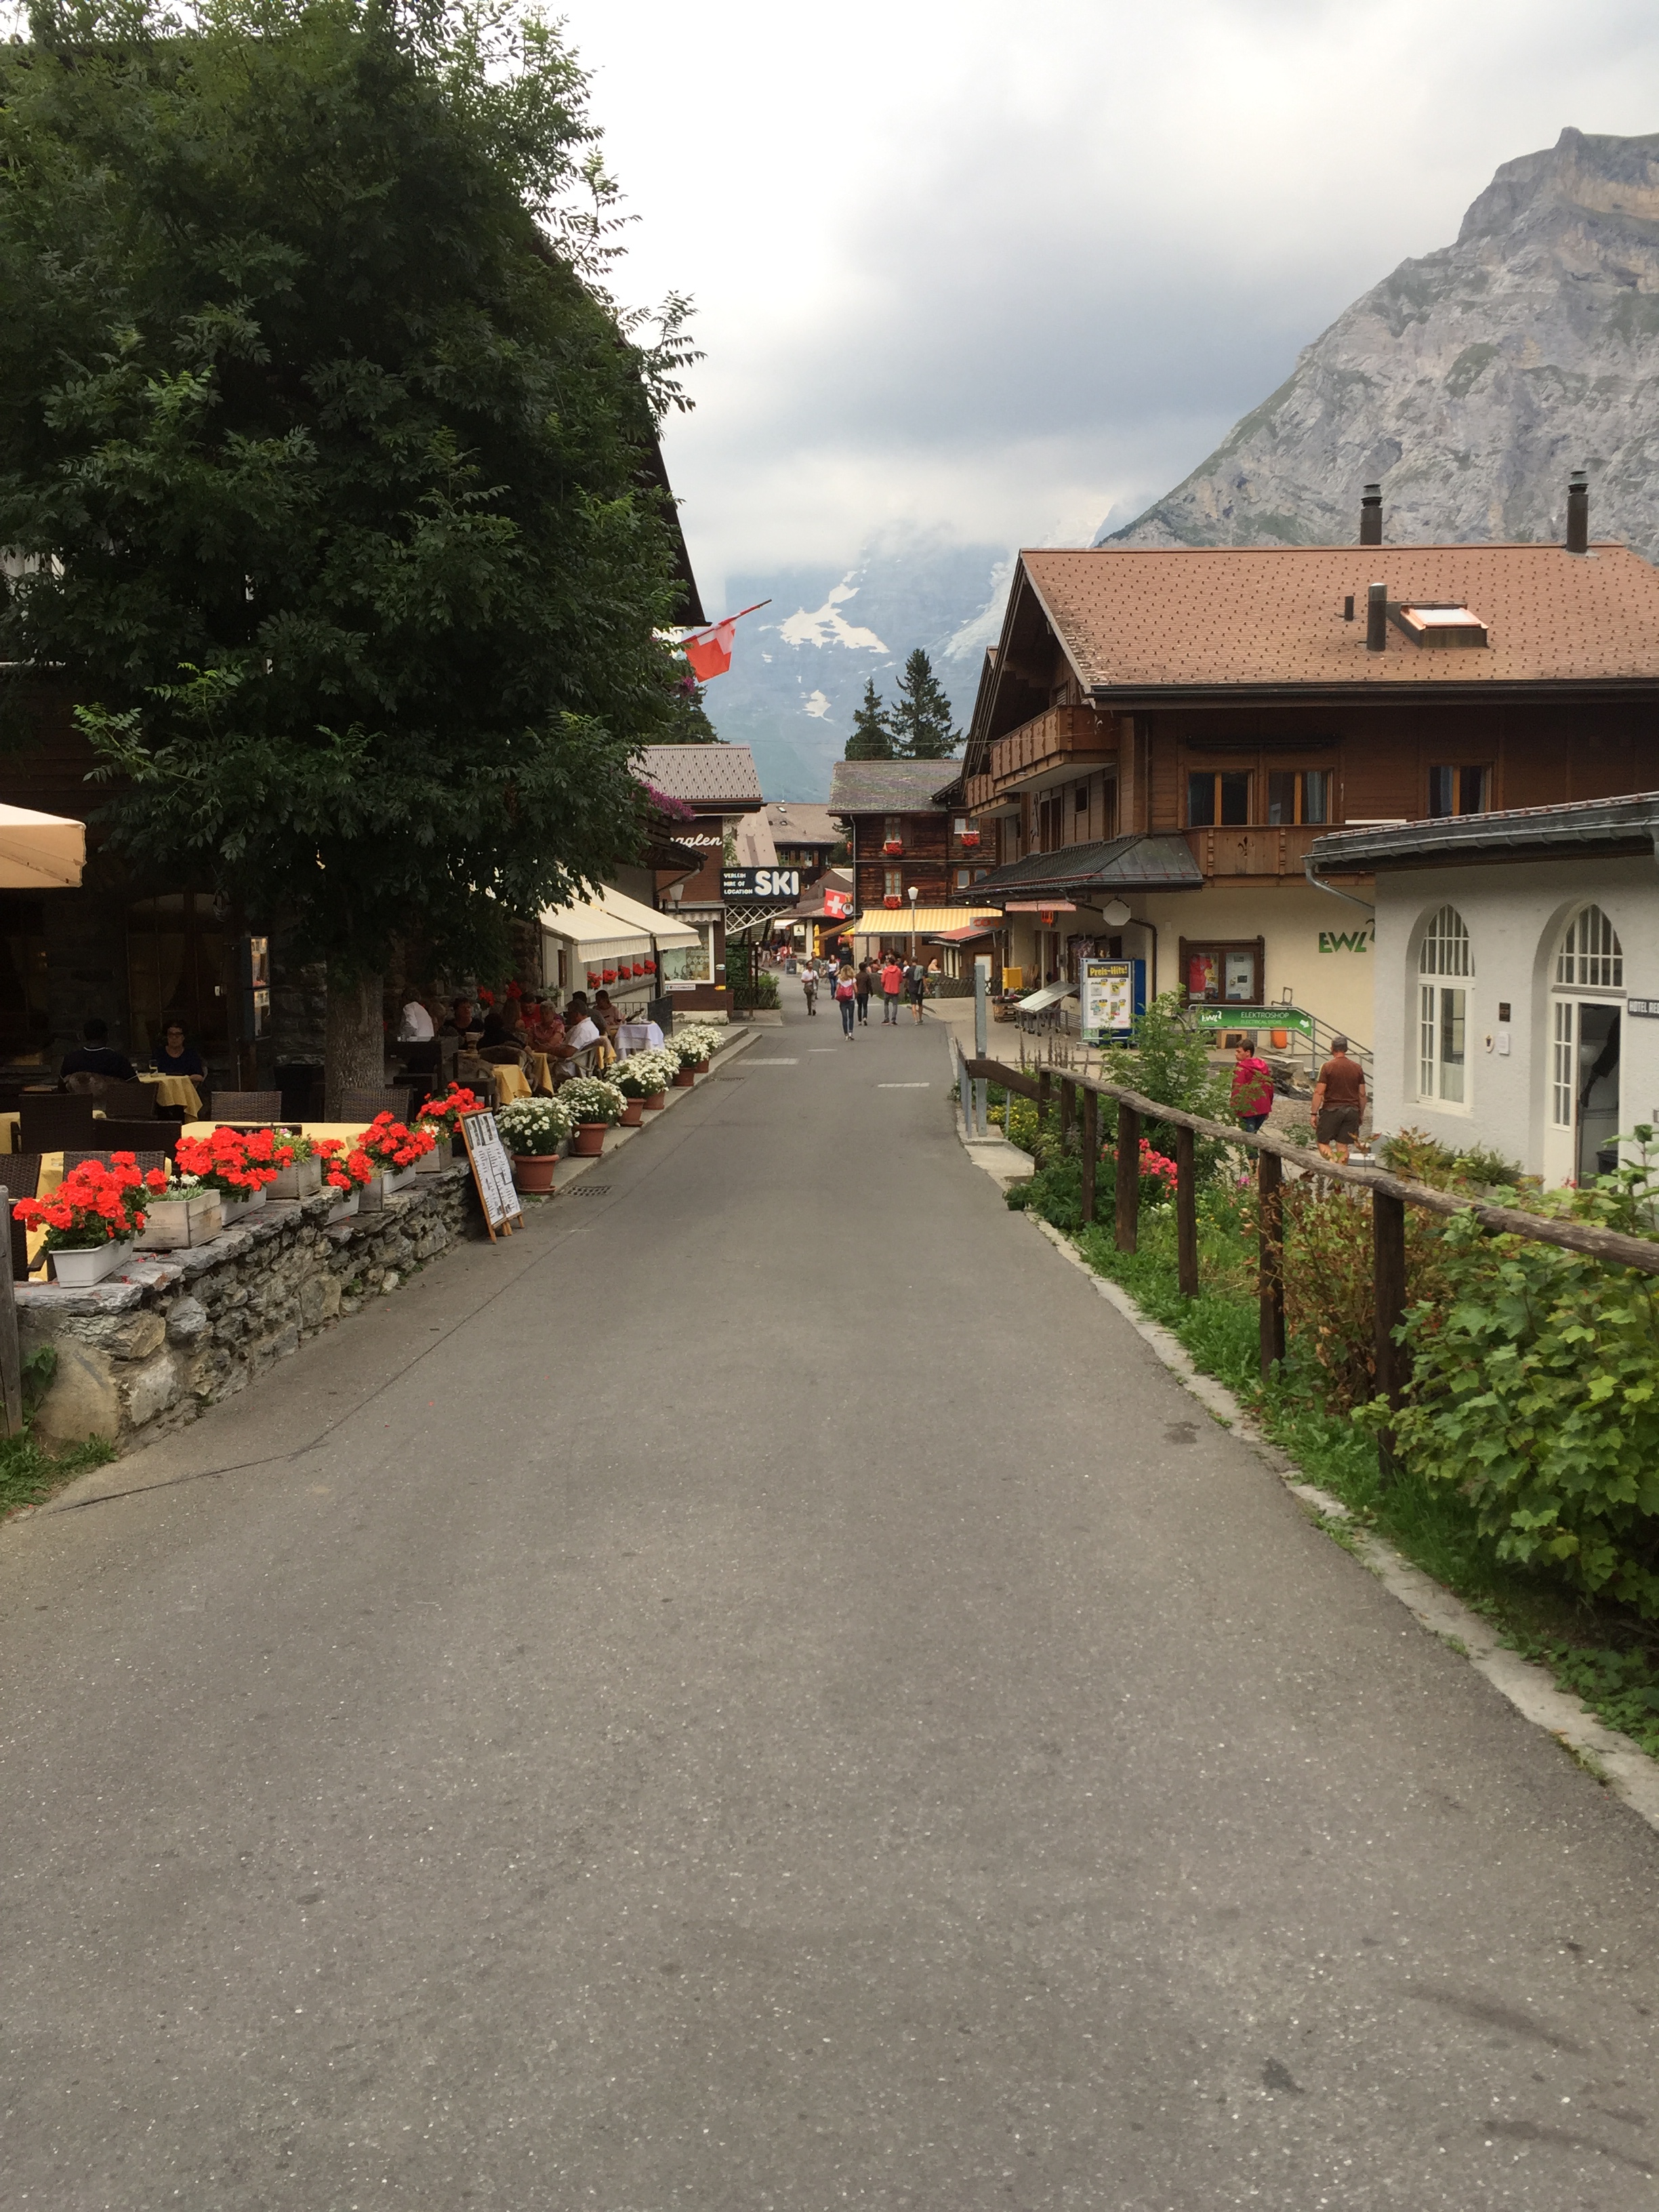 Road for walking in Mürren, Switzerland, lined with flowers